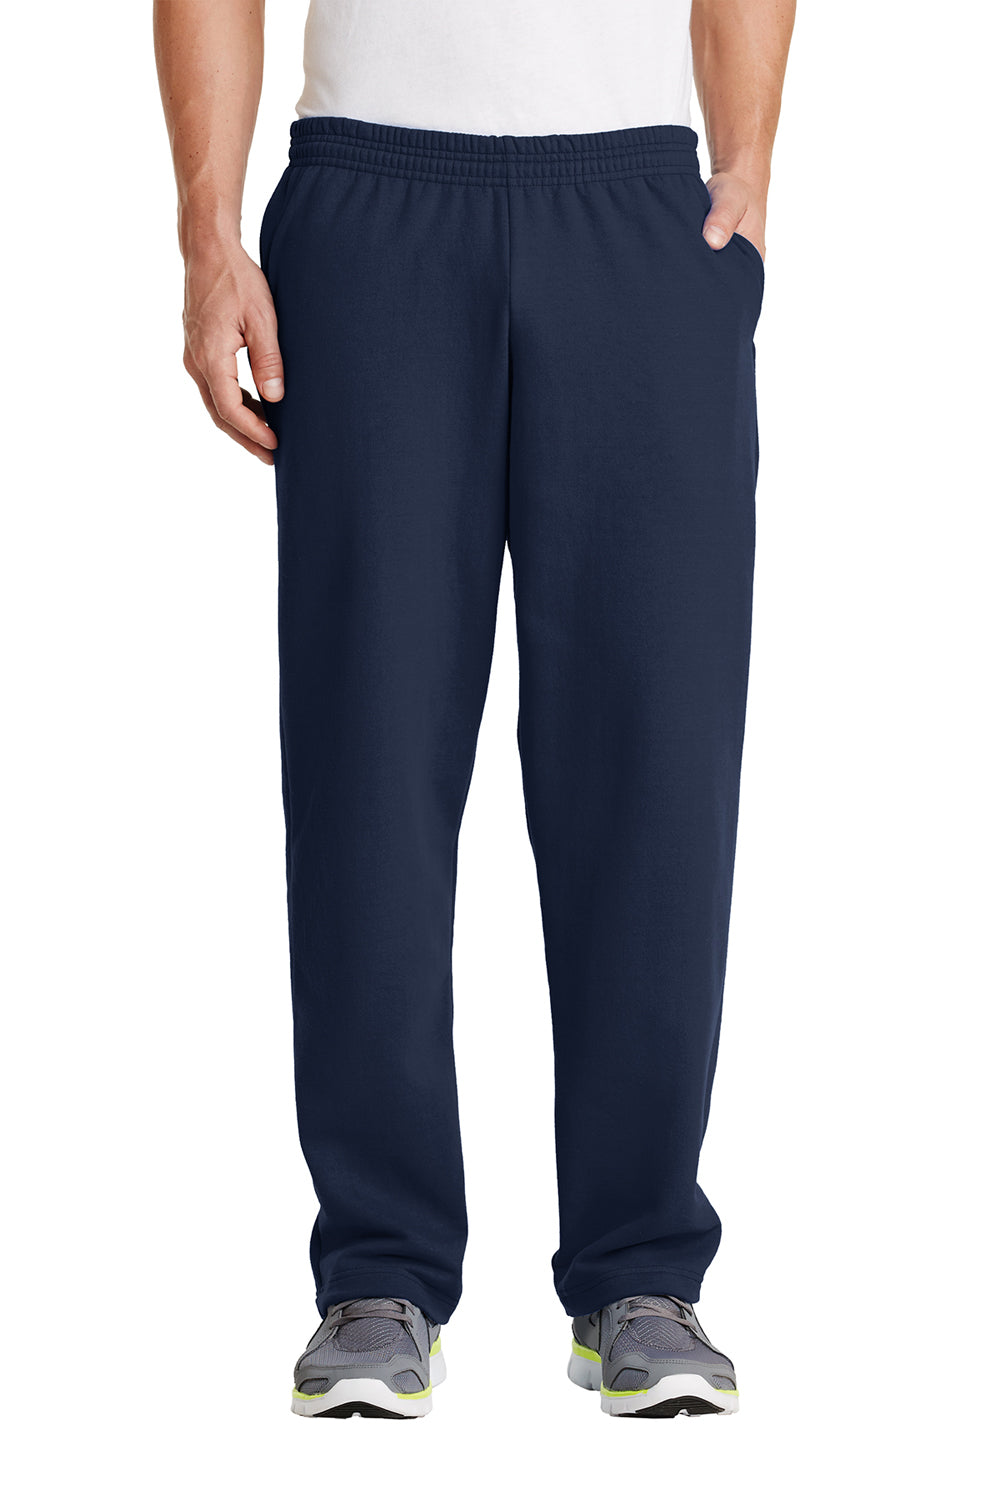 Port & Company PC78P Mens Core Fleece Open Bottom Sweatpants w/ Pockets Navy Blue Front